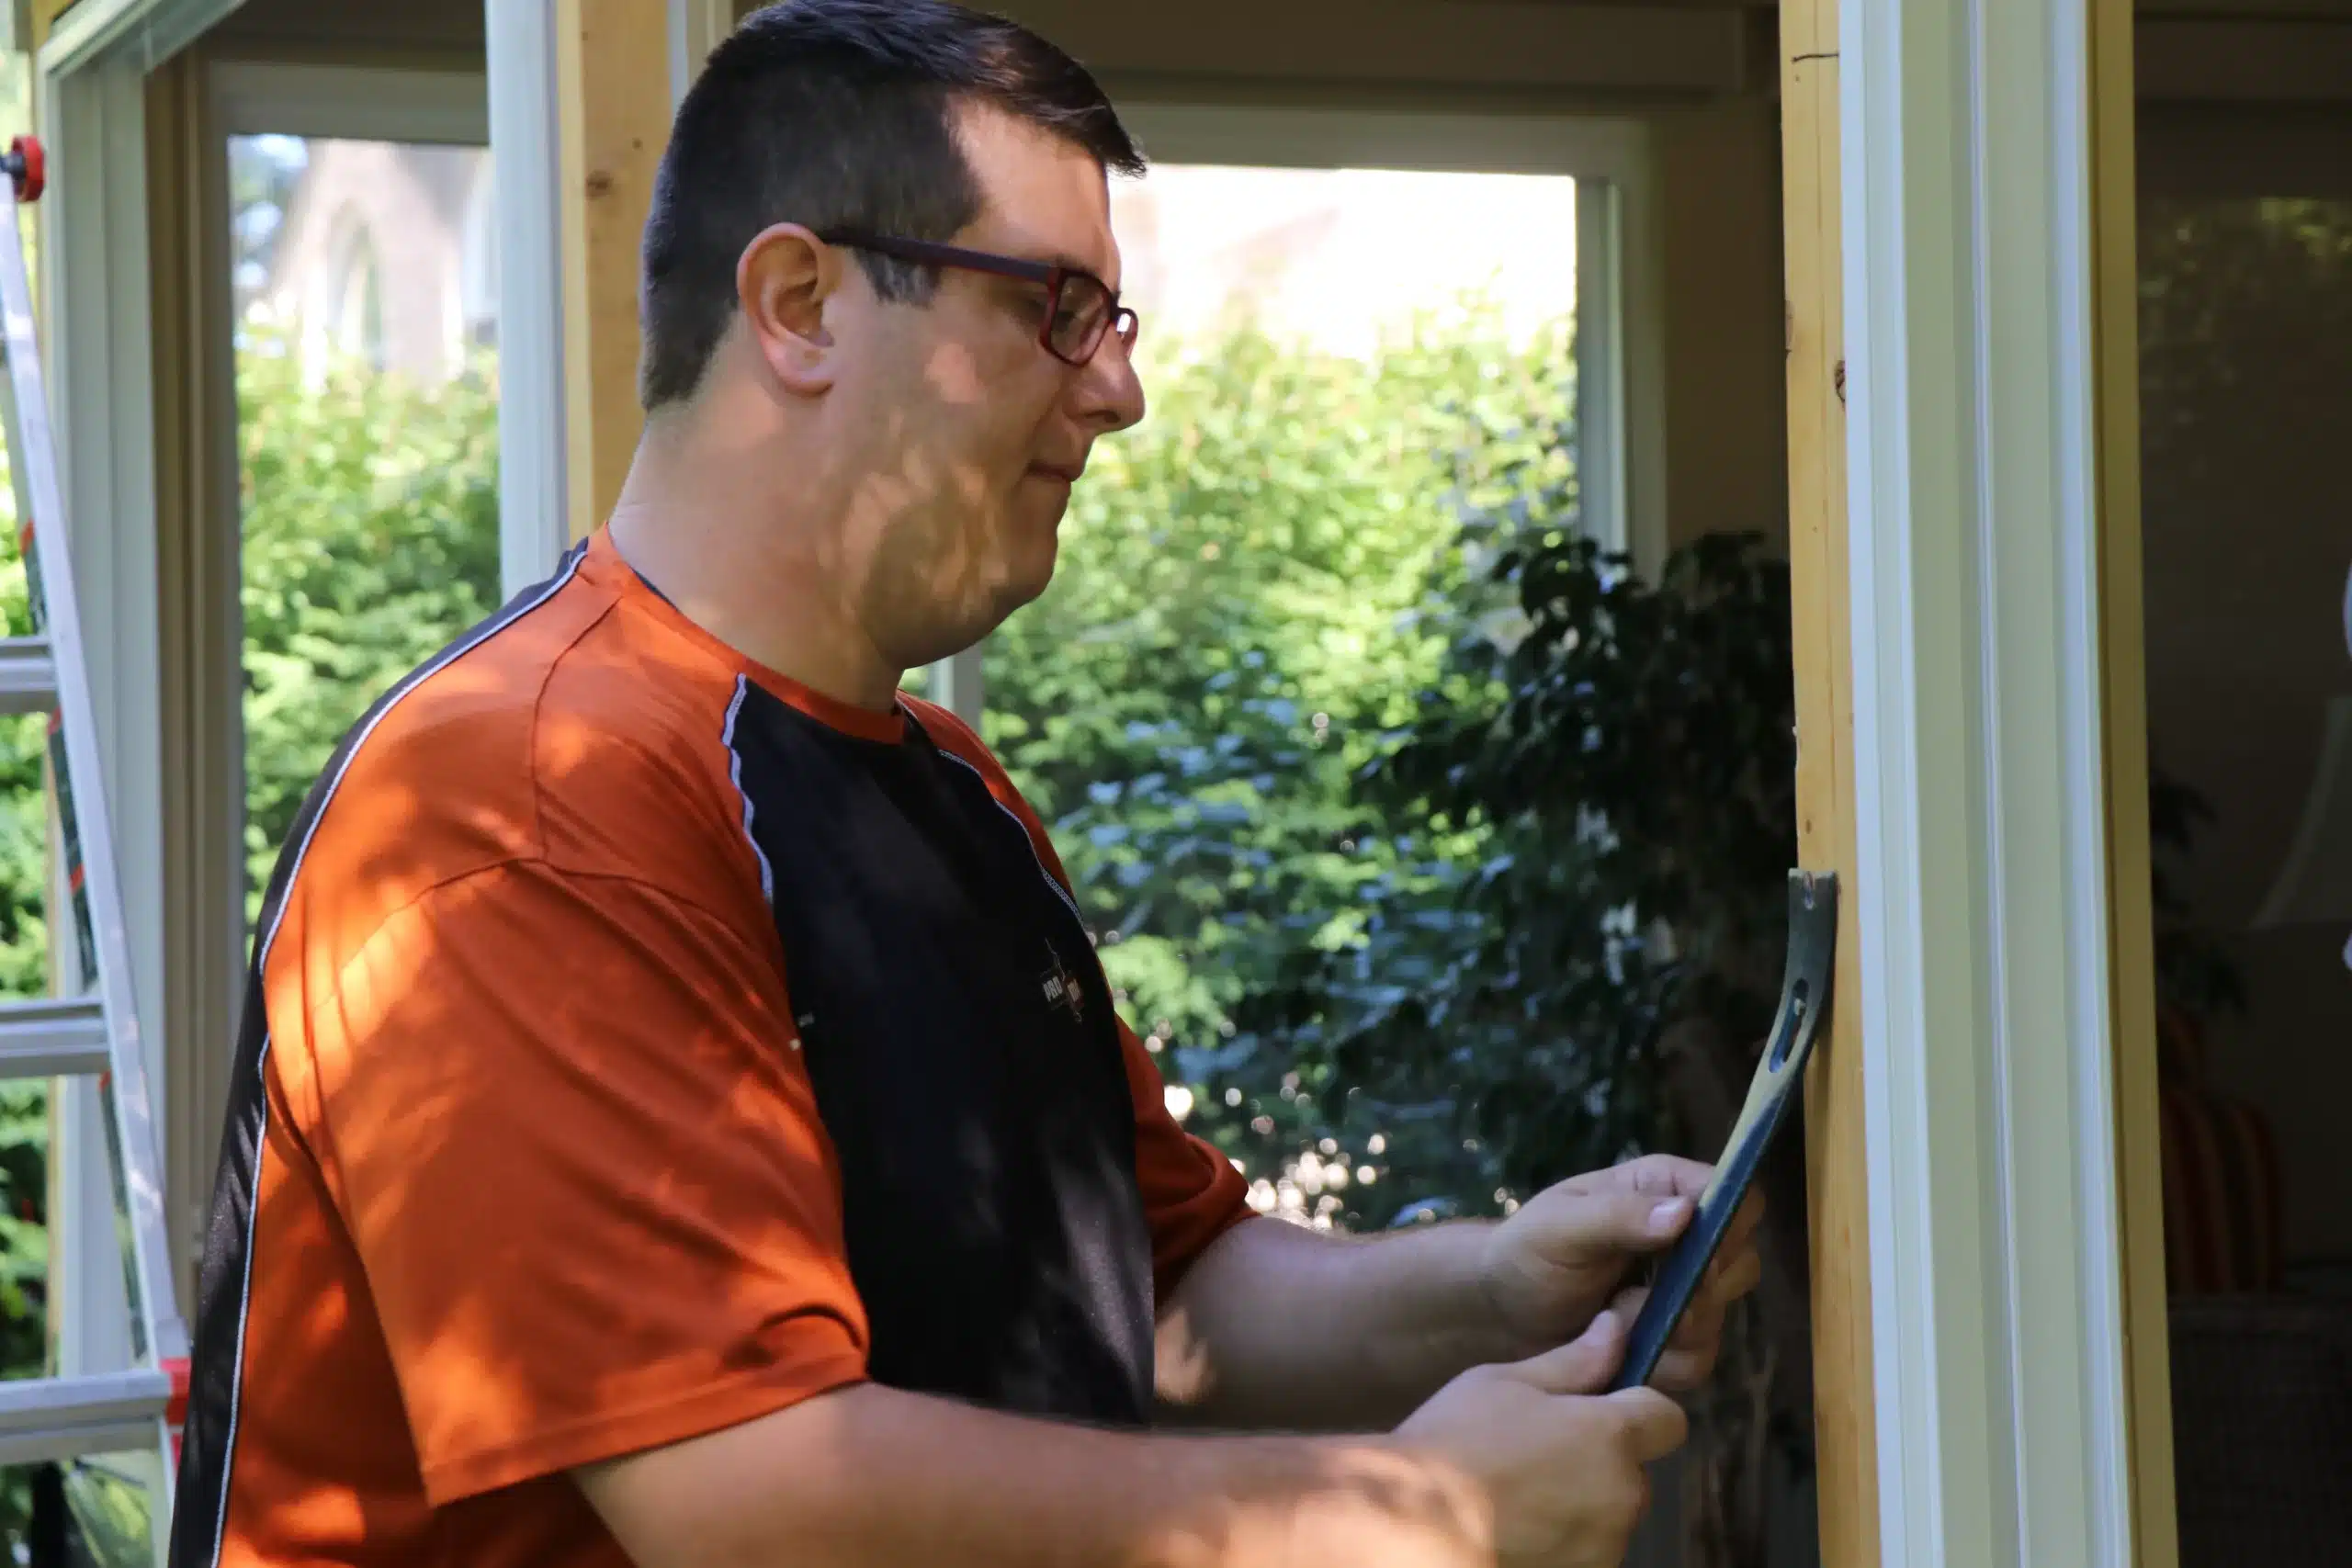 ProMaster craftsman performs an East Cincinnati handyman service, wood rot repair.